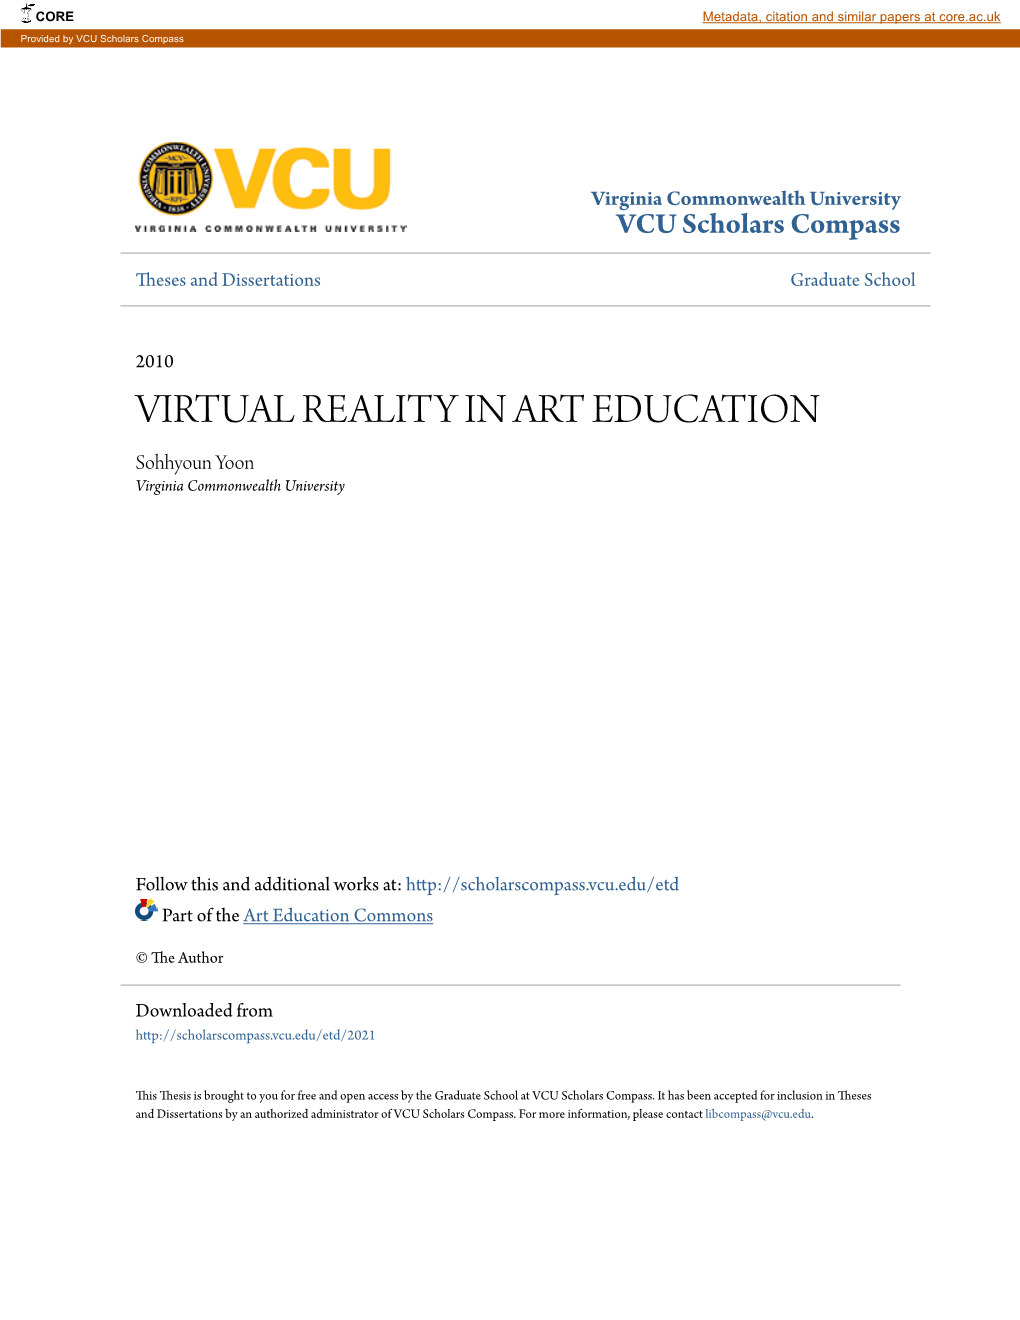 VIRTUAL REALITY in ART EDUCATION Sohhyoun Yoon Virginia Commonwealth University